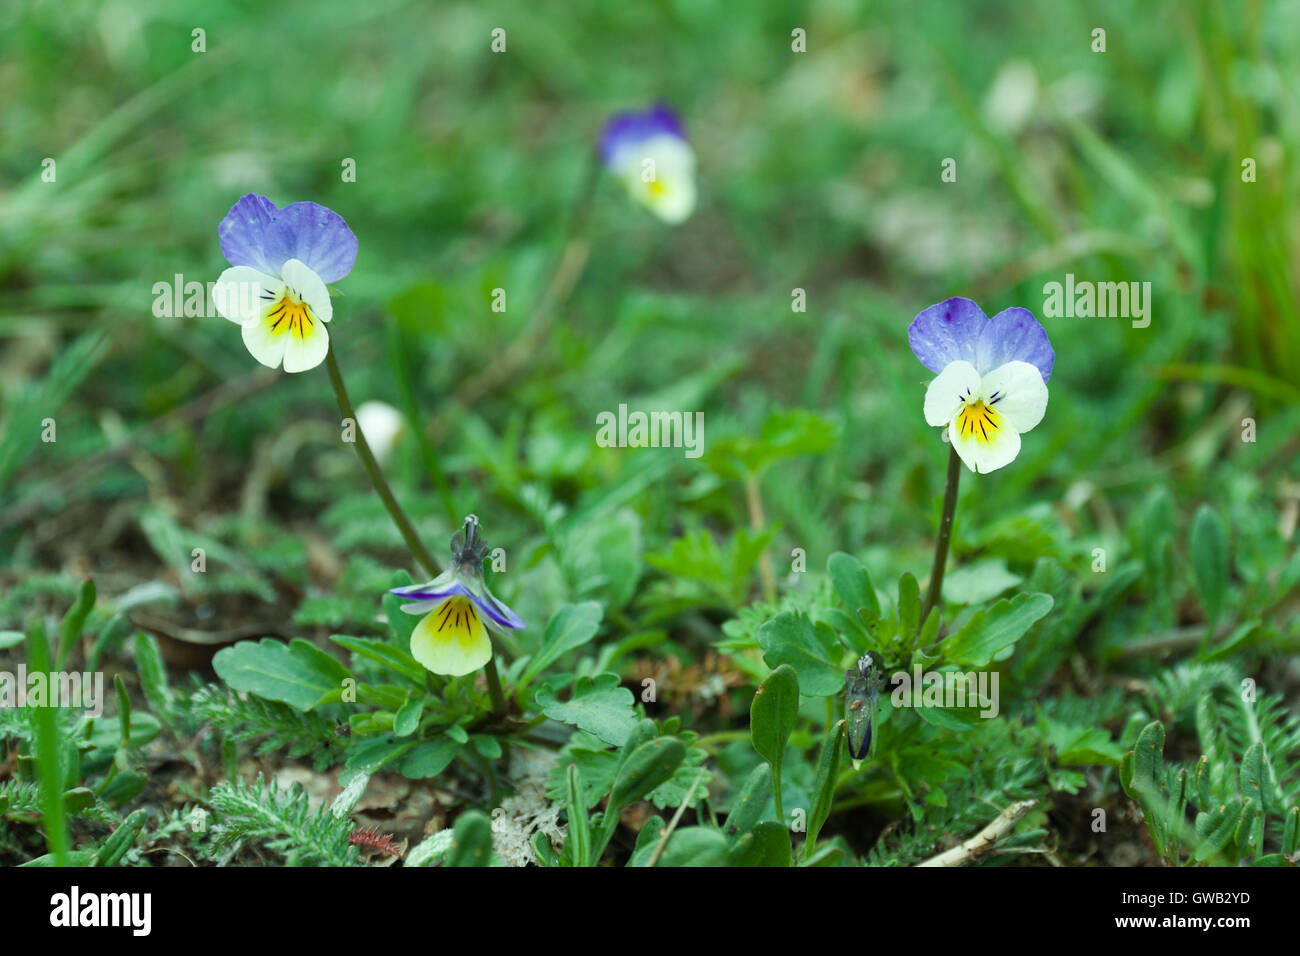 Botanic gardening plant nature image: pansy (viola tricolor, Viola cornuta) flowers closeup among green plants Stock Photo